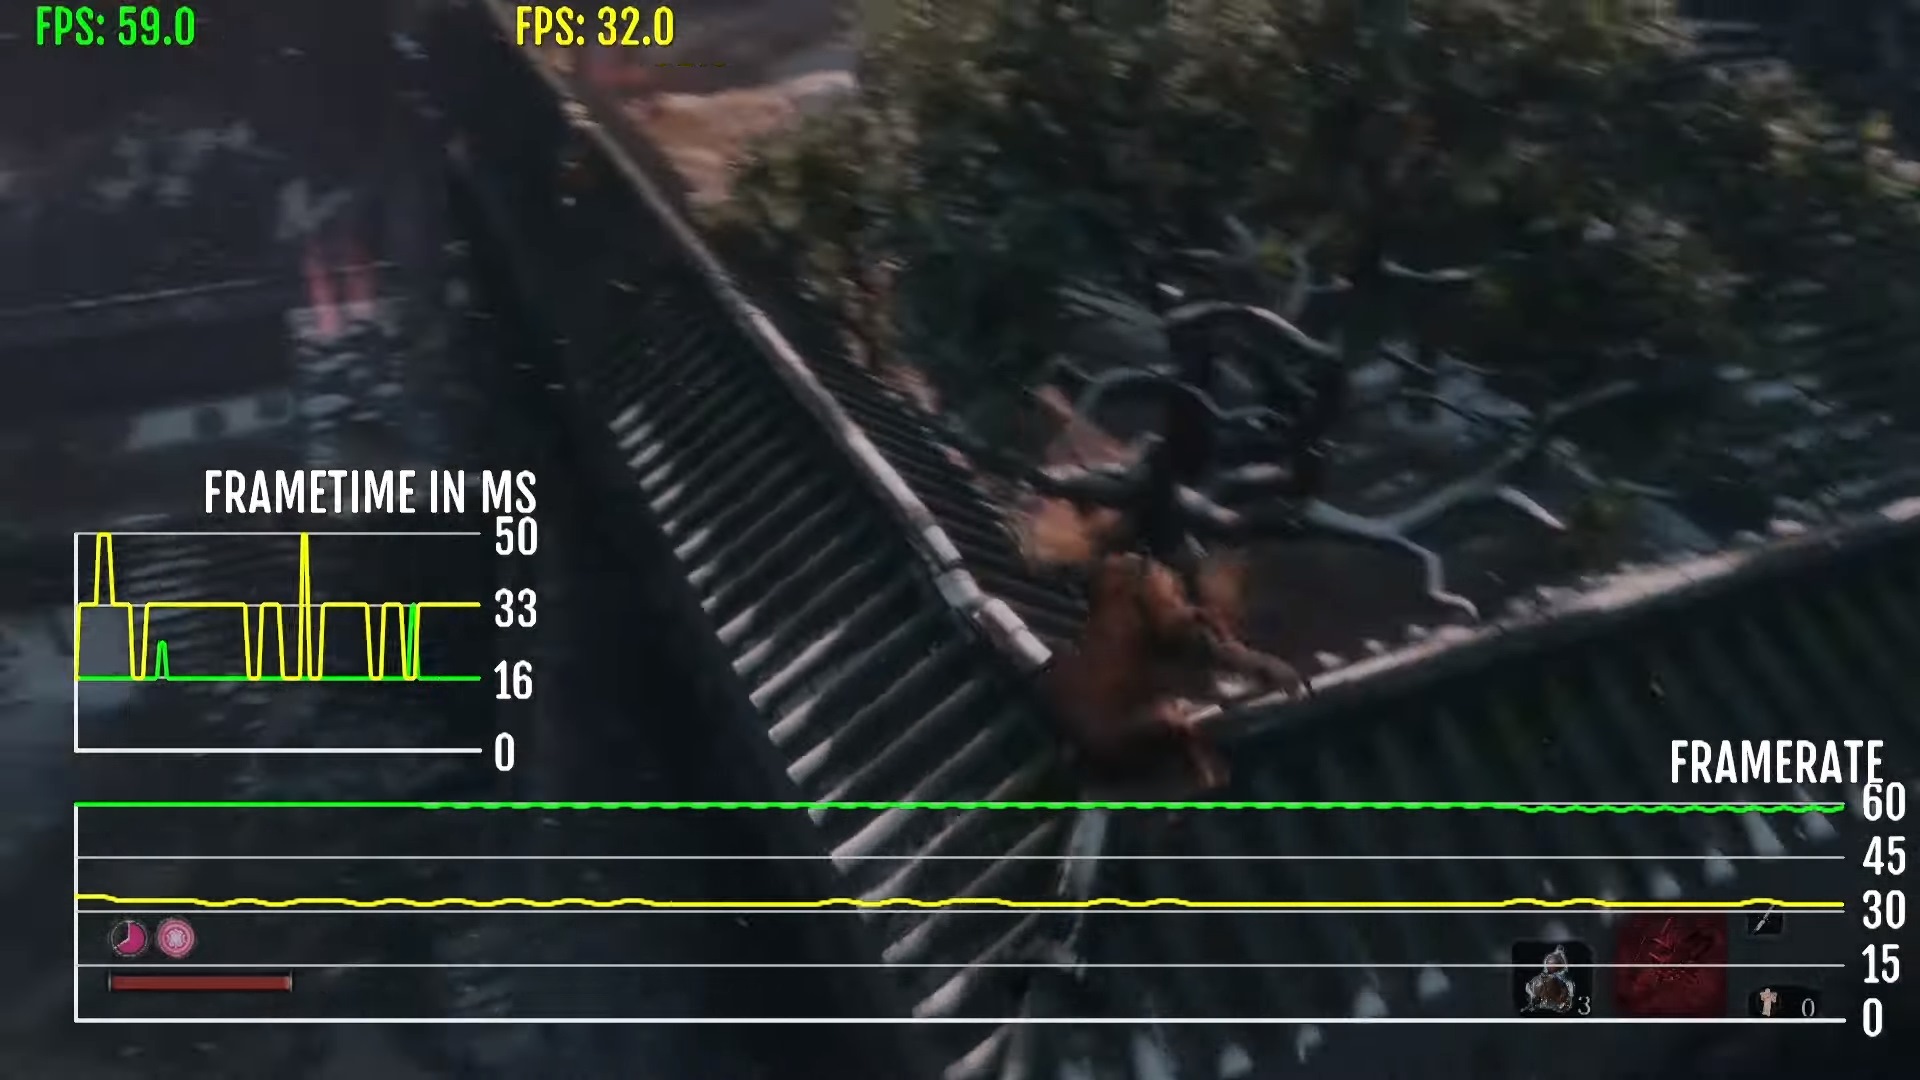 Sekiro PS5 vs Xbox Series XS Frame Rate Comparison (Backwards  Compatibility) 